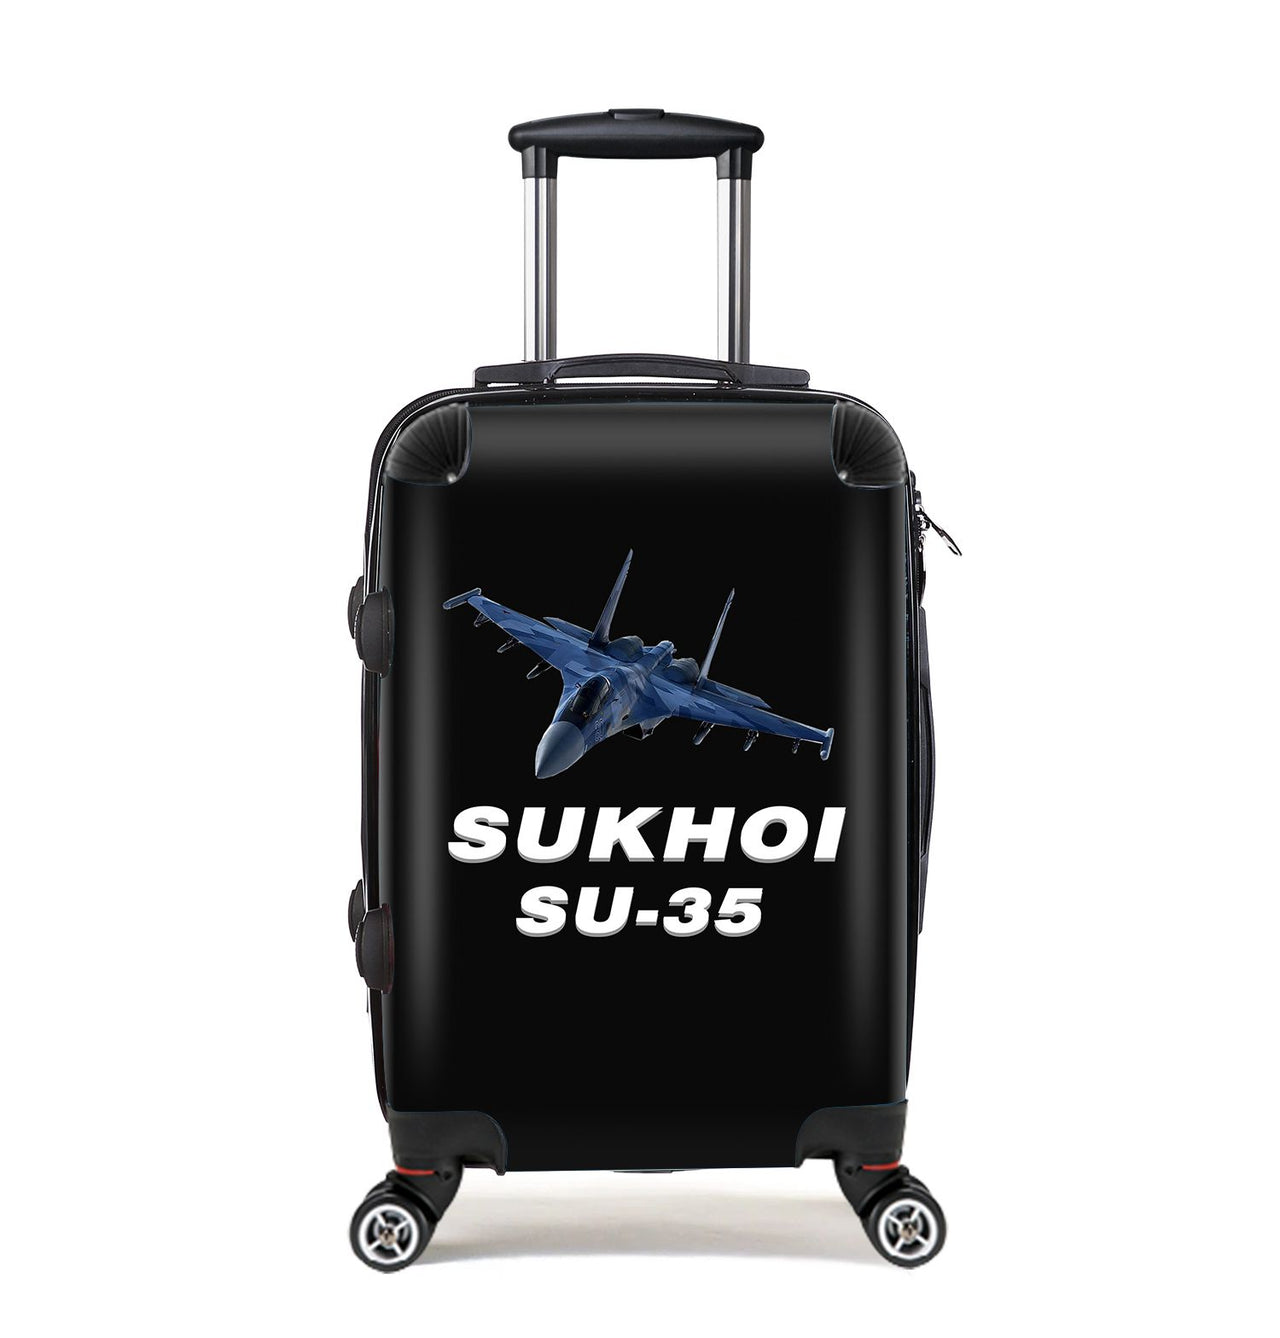 The Sukhoi SU-35 Designed Cabin Size Luggages